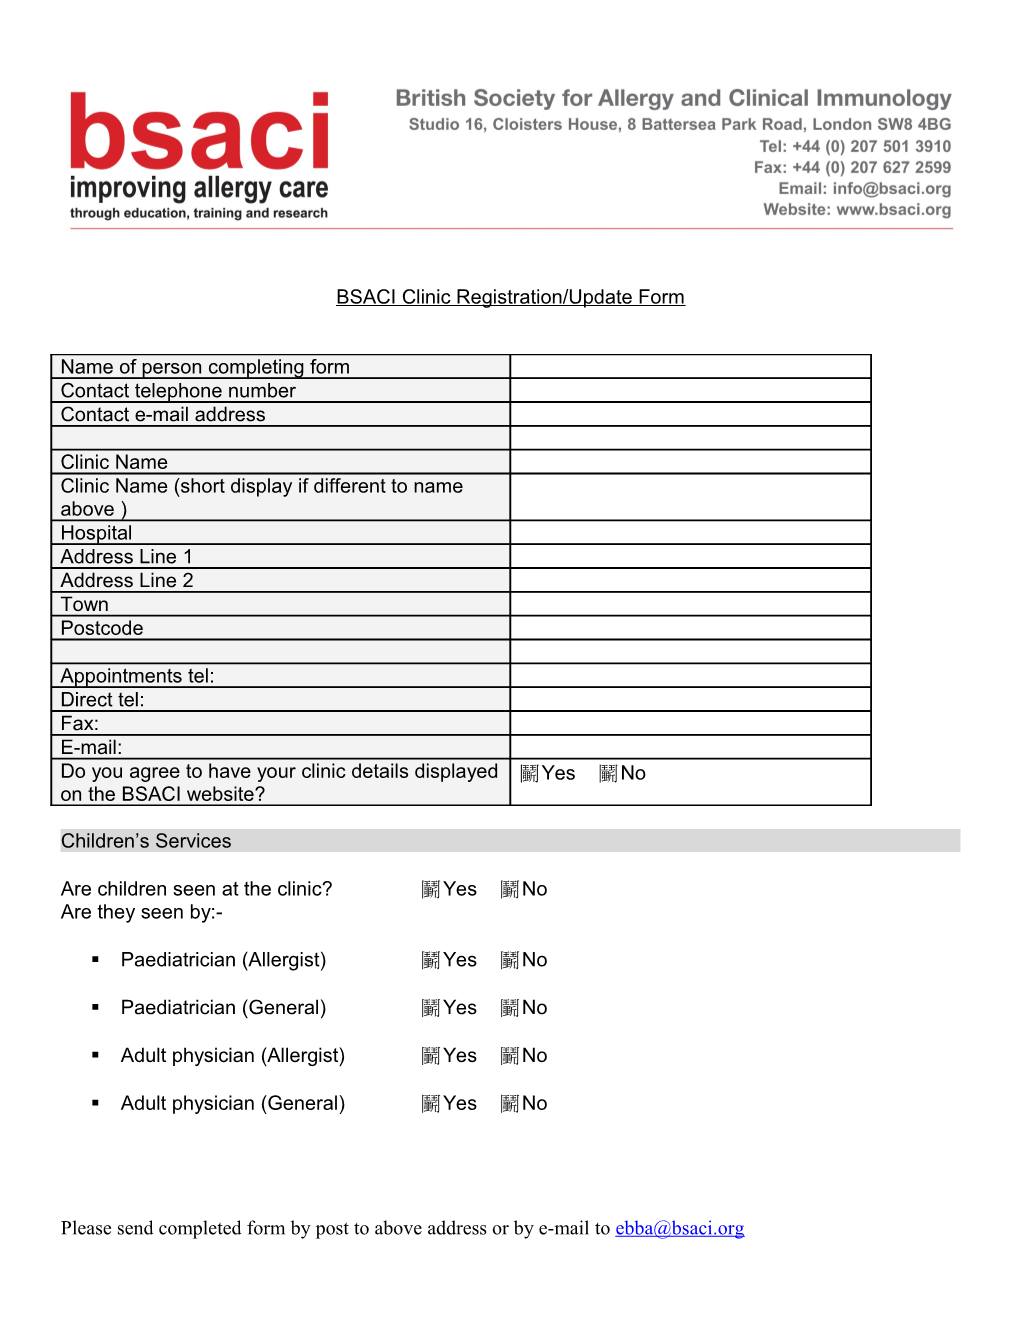 BSACI Clinic Registration Form